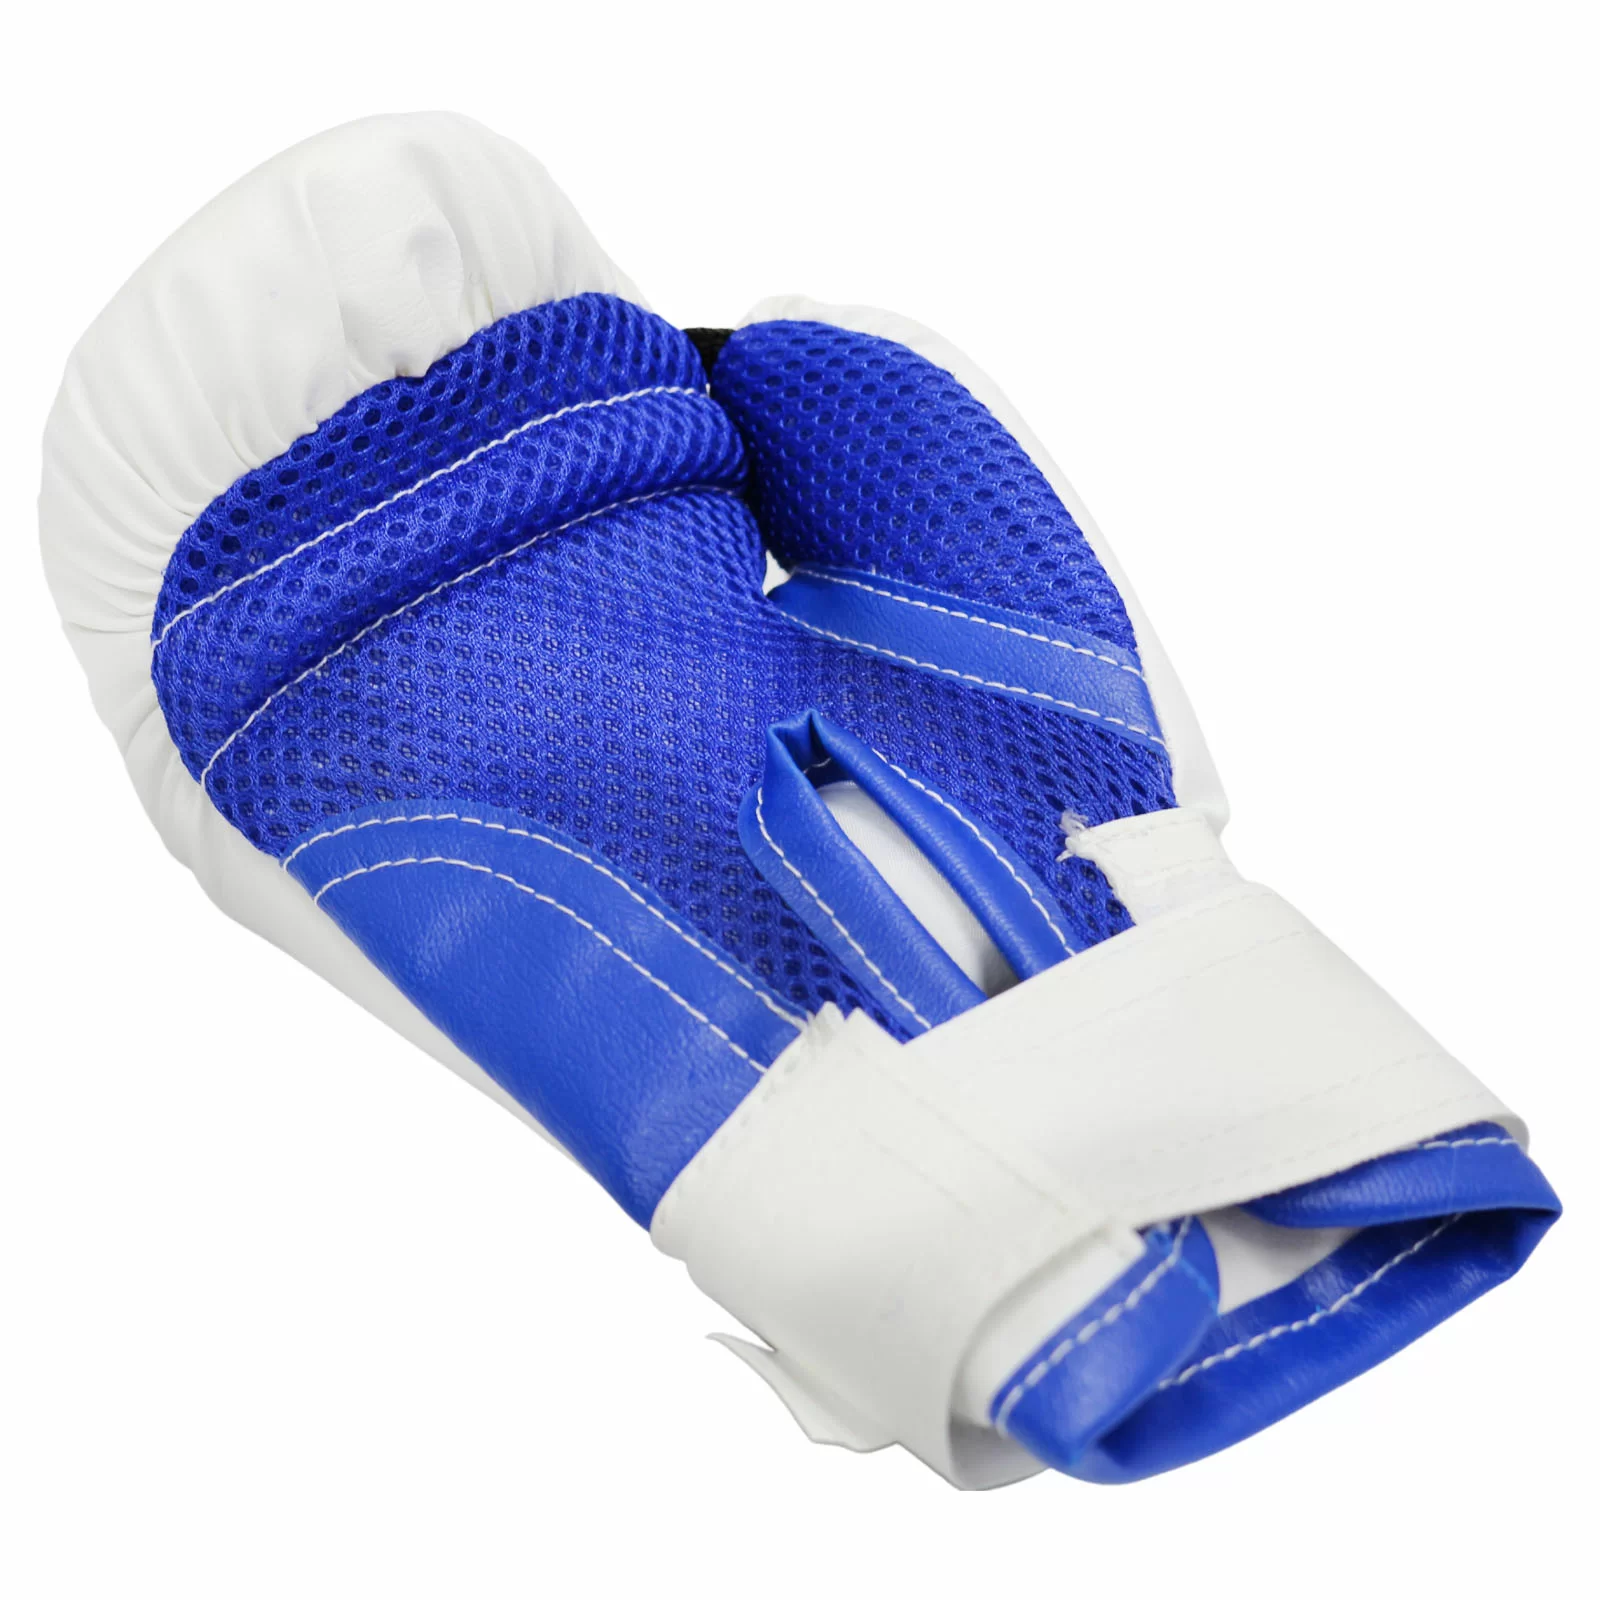 Фото Набор боксерский для начинающих RuscoSport Триколор (перчатки бокс. 4 oz) синий со склада магазина СпортСЕ